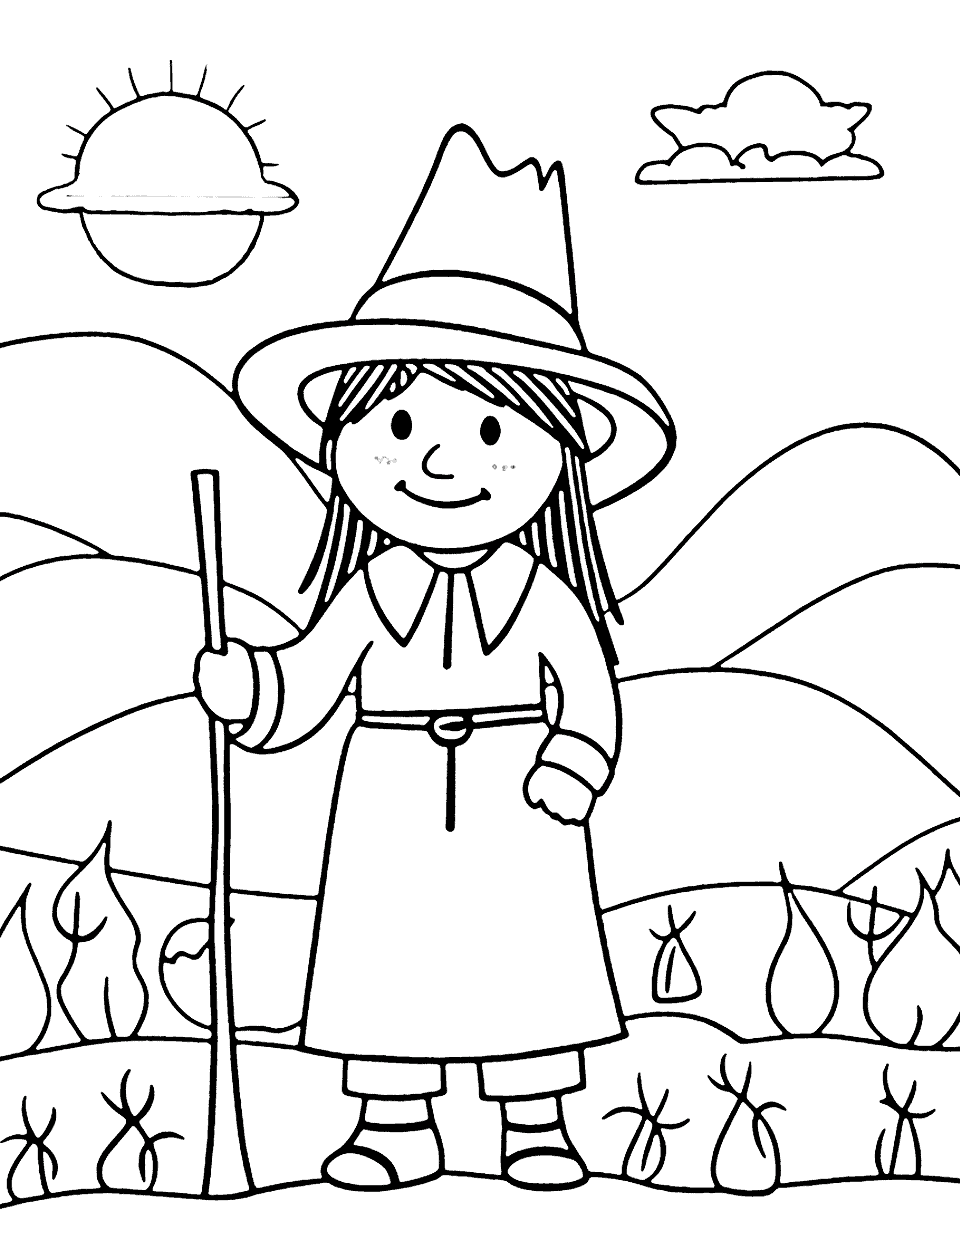 Pilgrim Scene Thanksgiving Coloring Page - A pilgrim harvesting the fields under the sun.